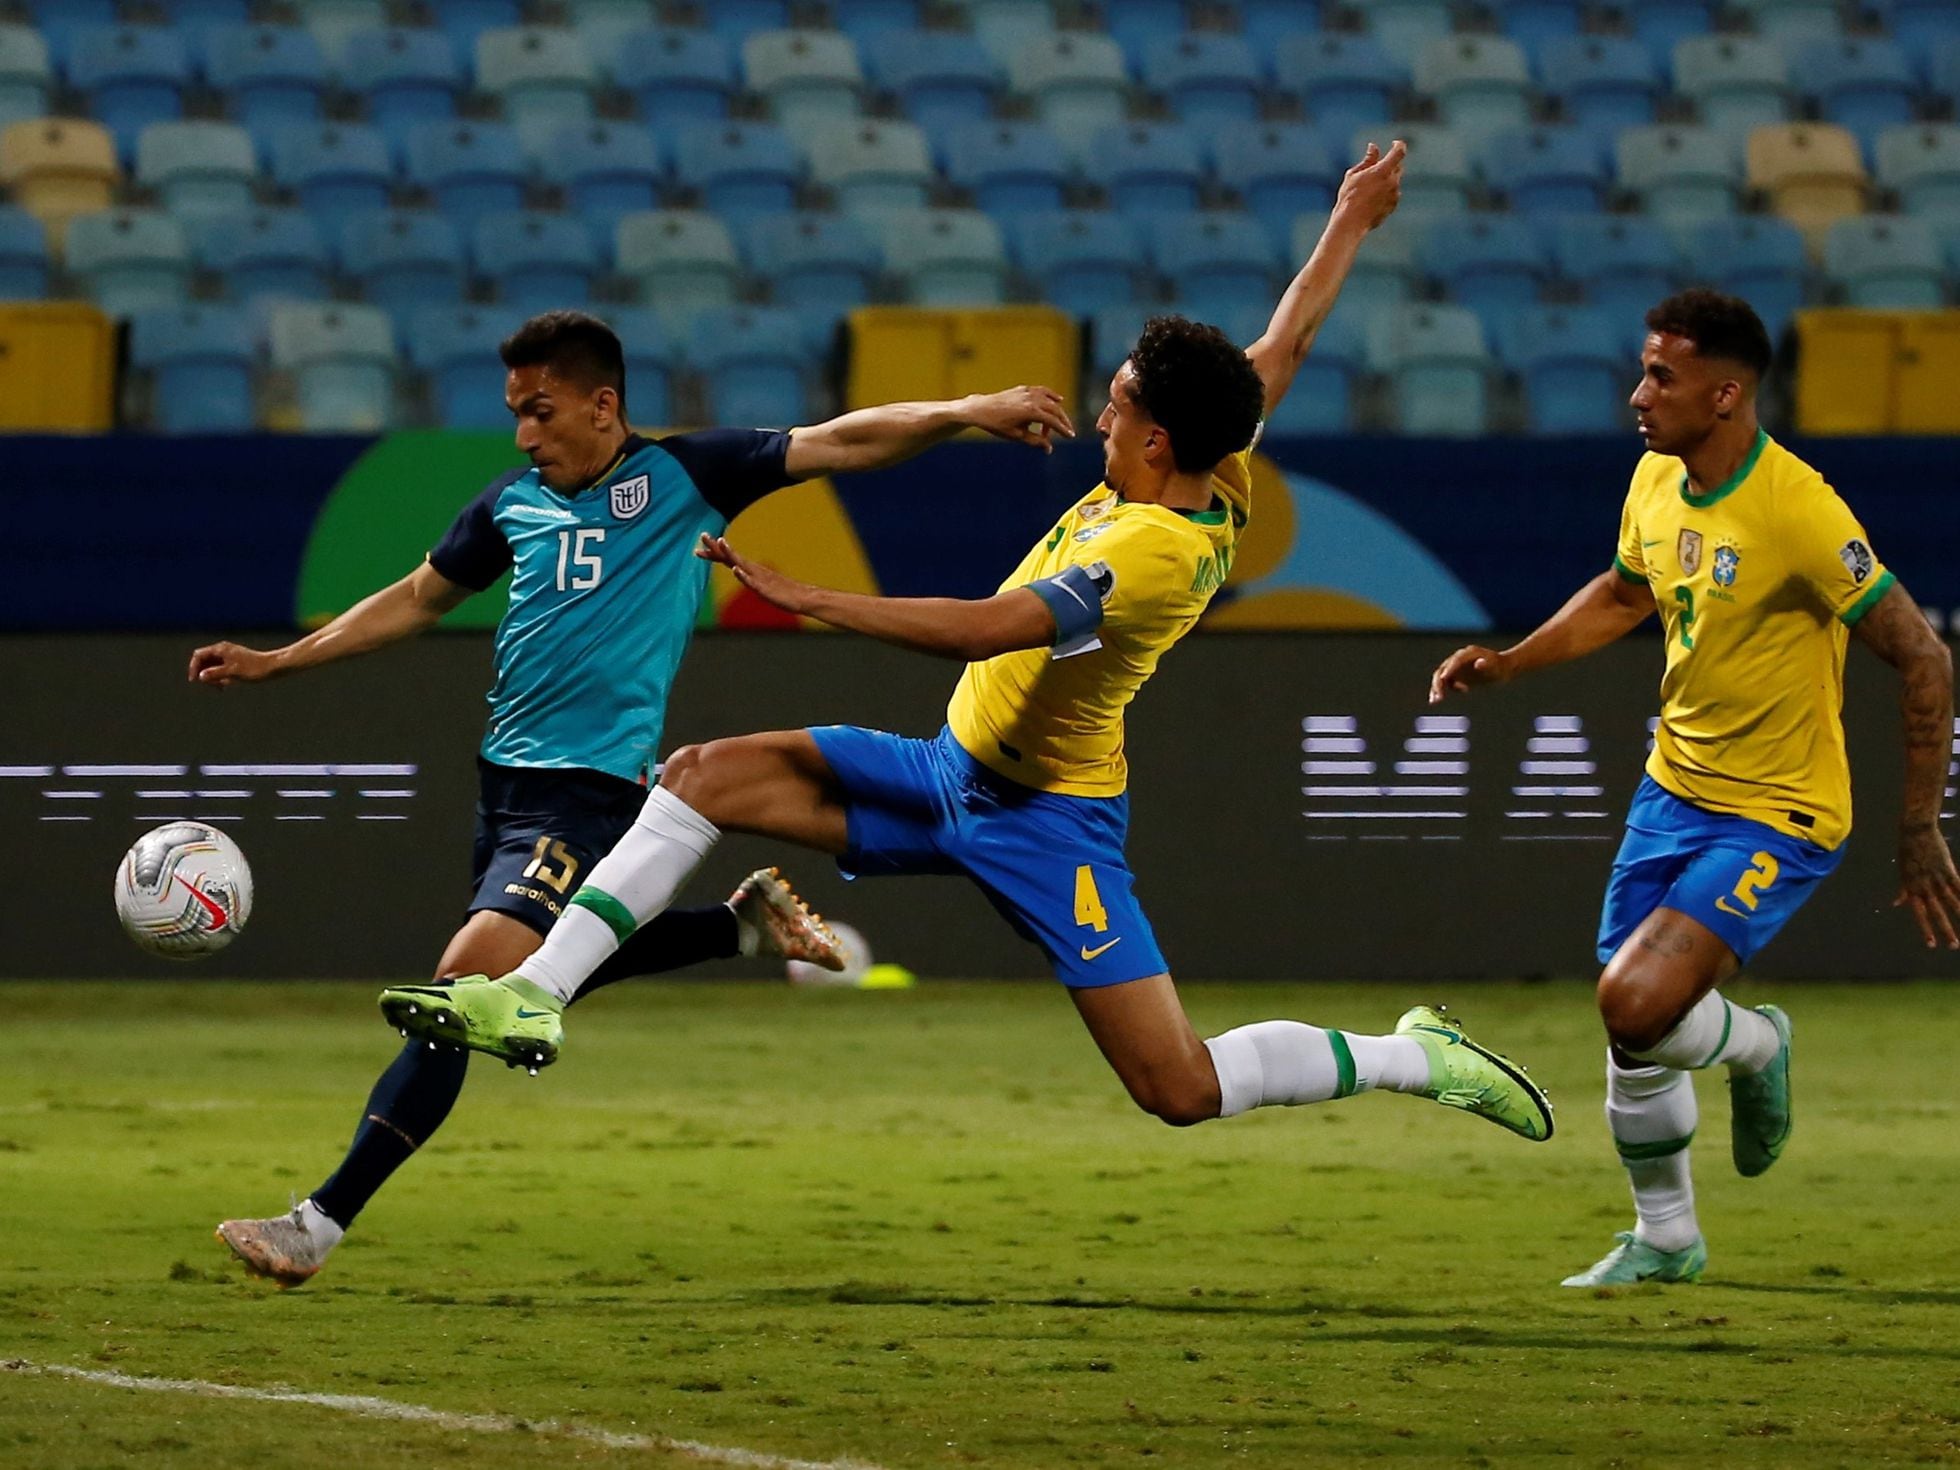 Jovem brasileira de 19 anos consegue empate surpreendente contra